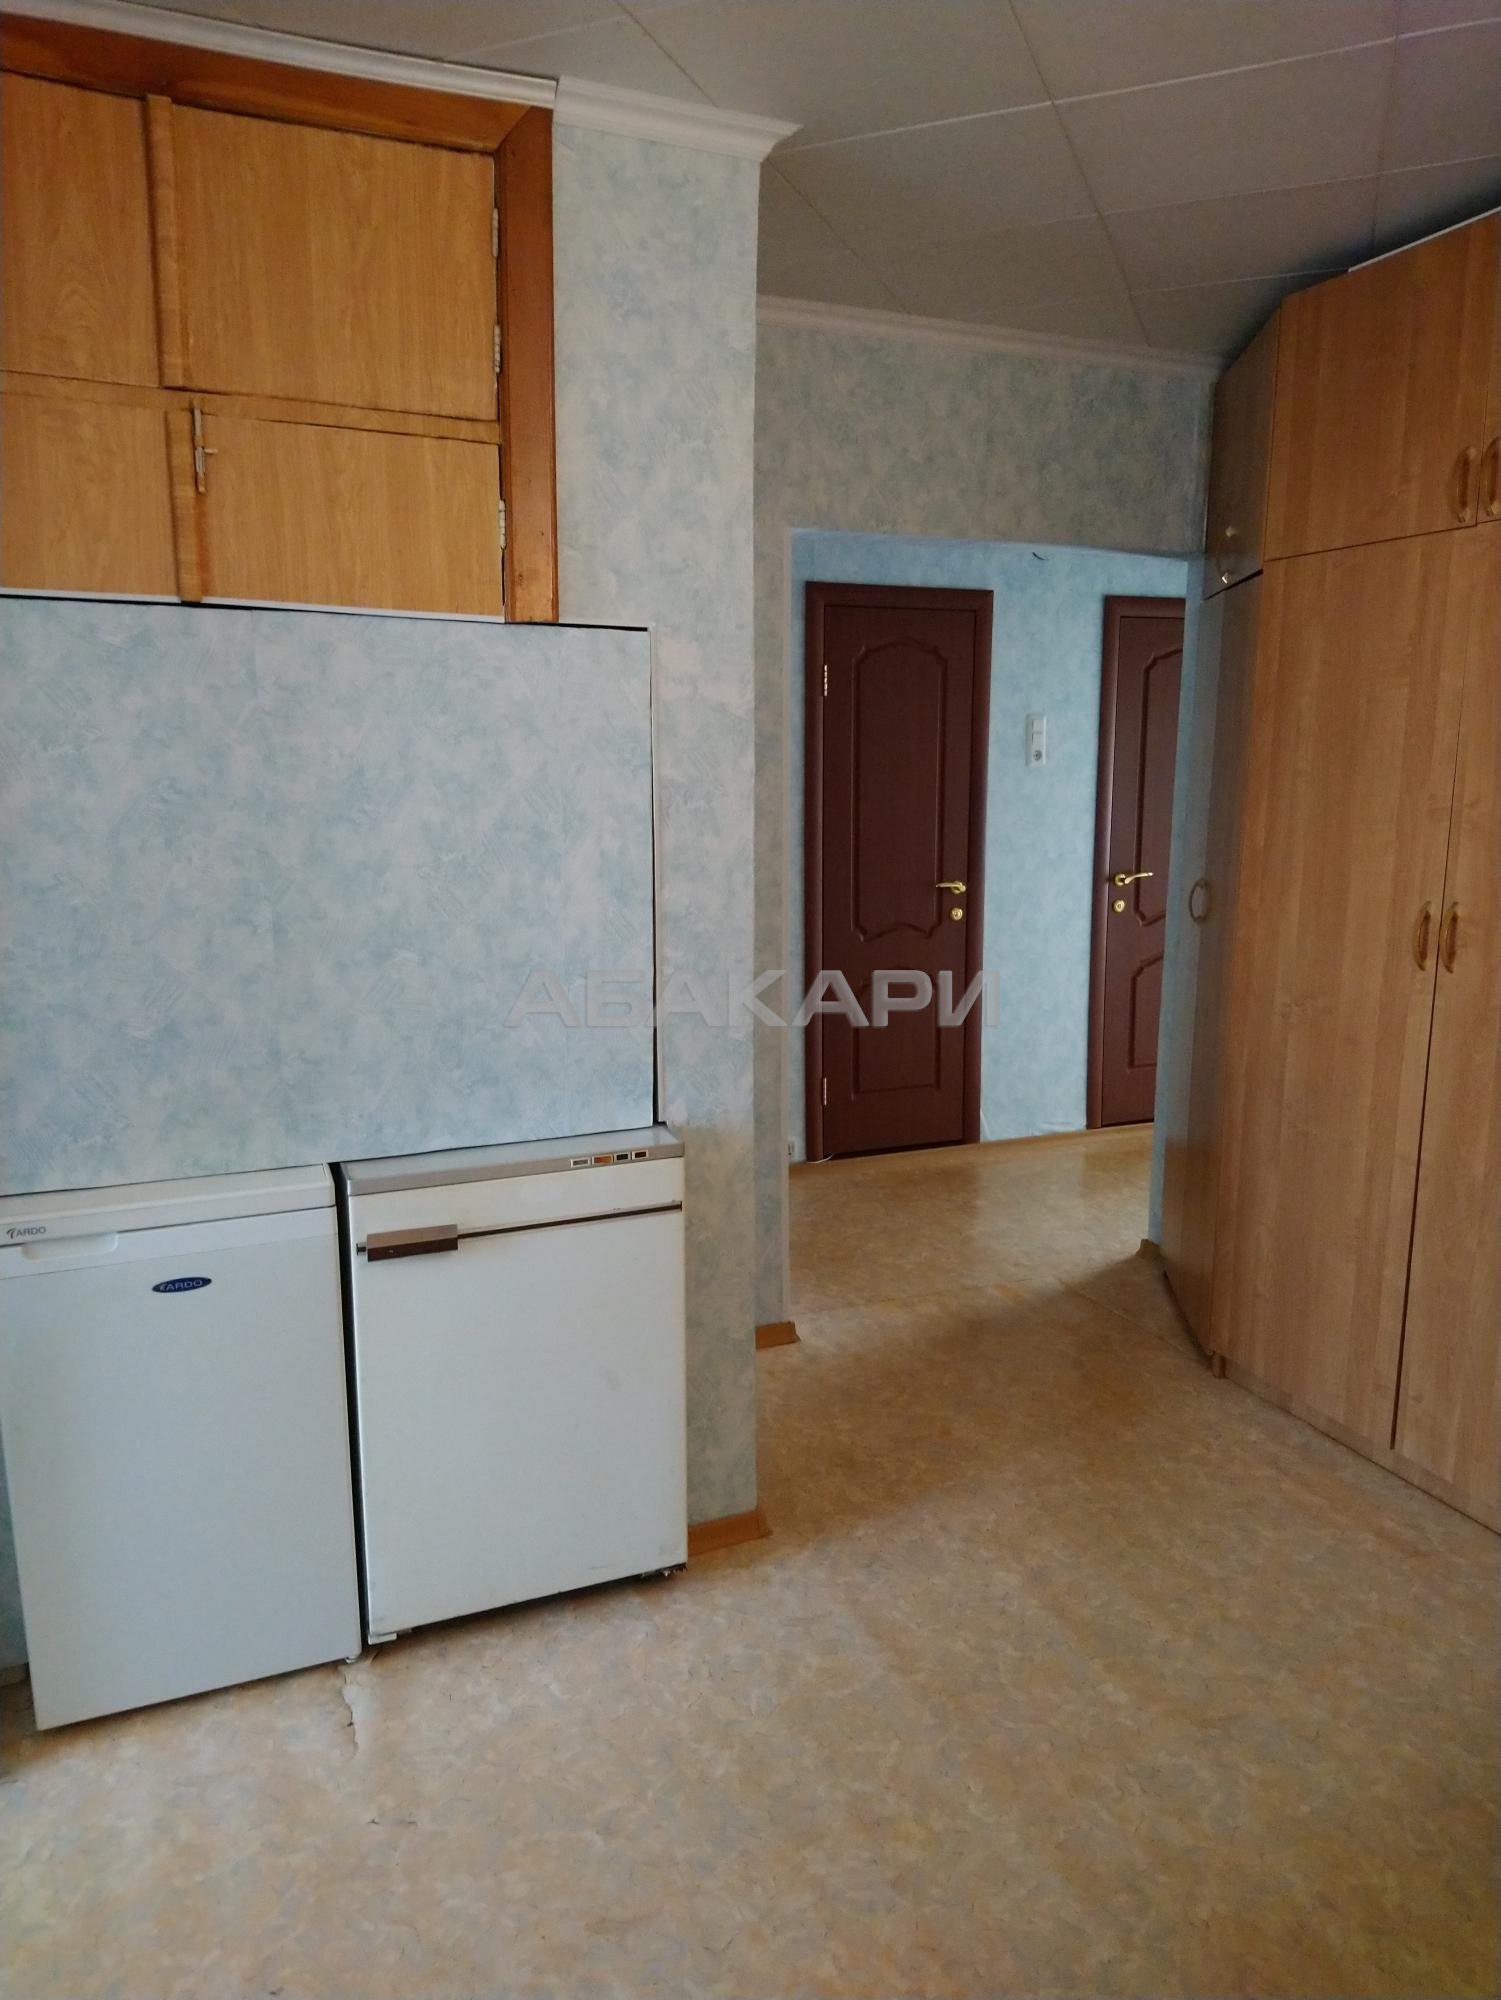 3-комнатная улица Малиновского, 27  за 19000 руб/мес фото 14